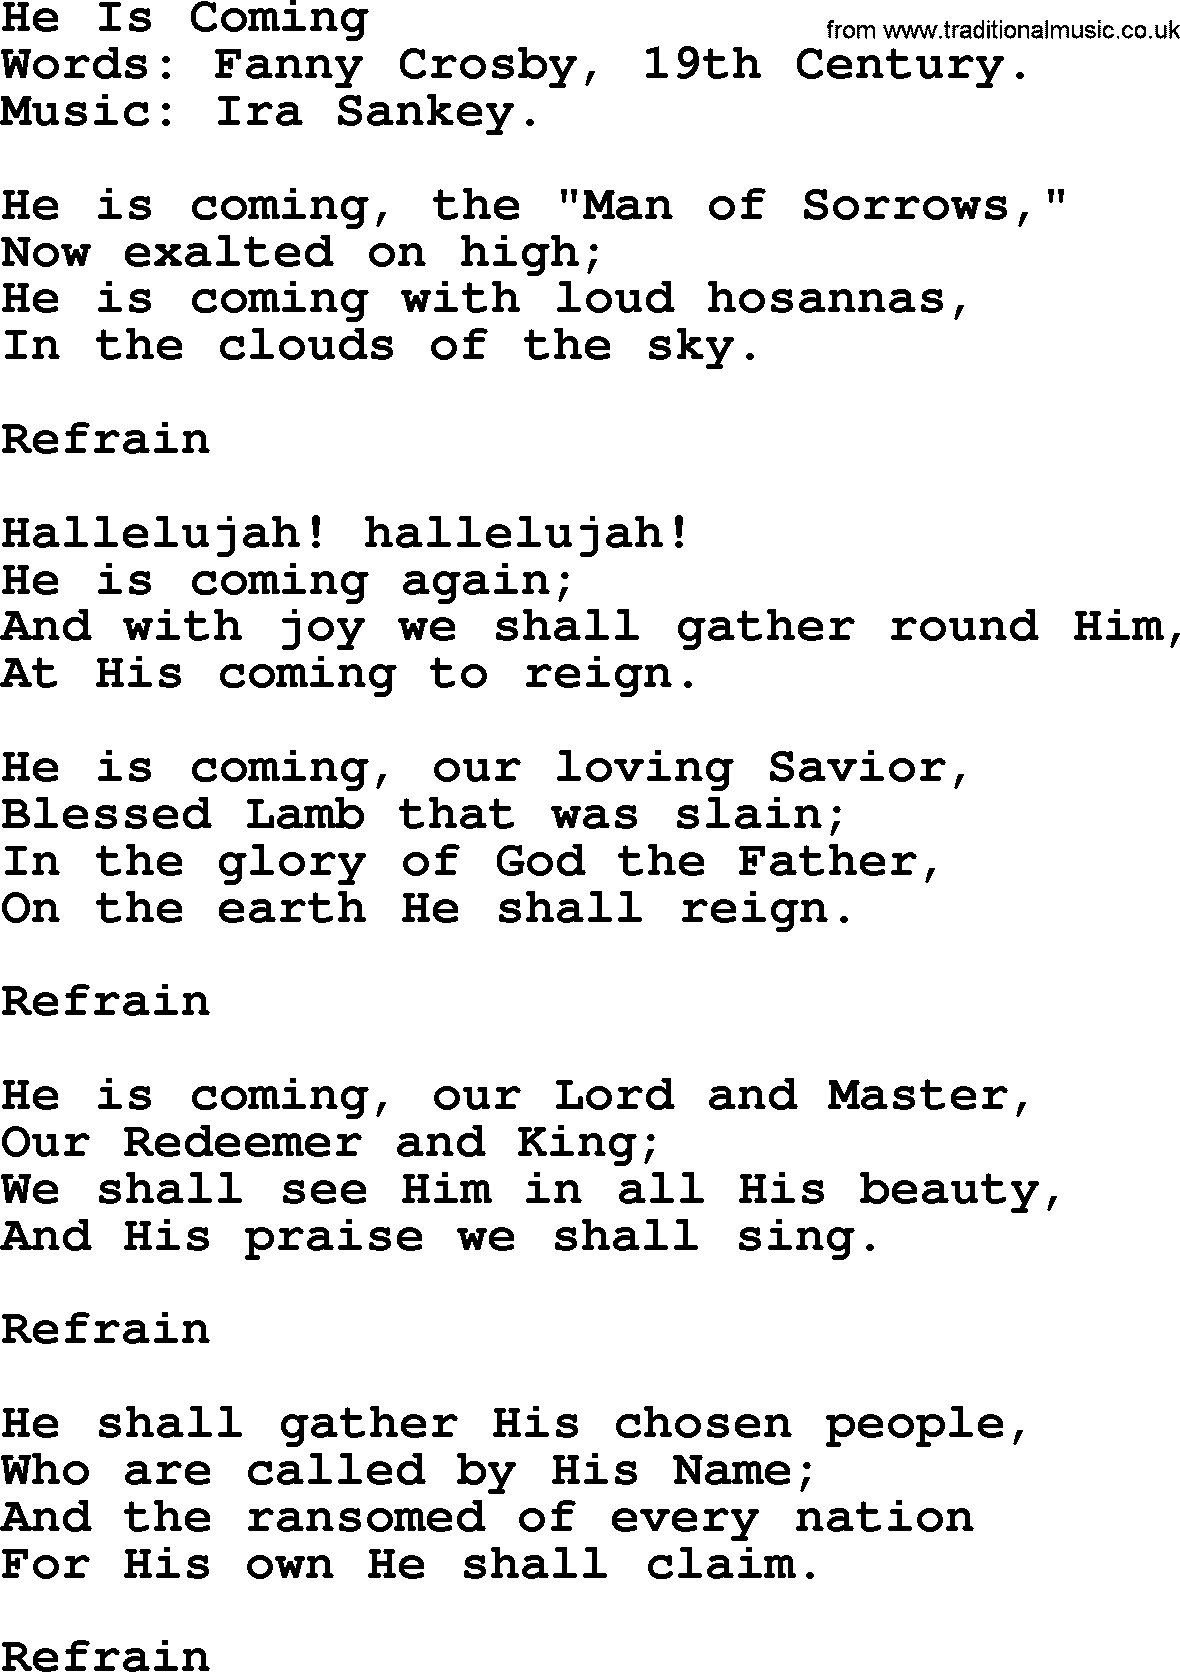 Ira Sankey hymn: He Is Coming-Ira Sankey, lyrics